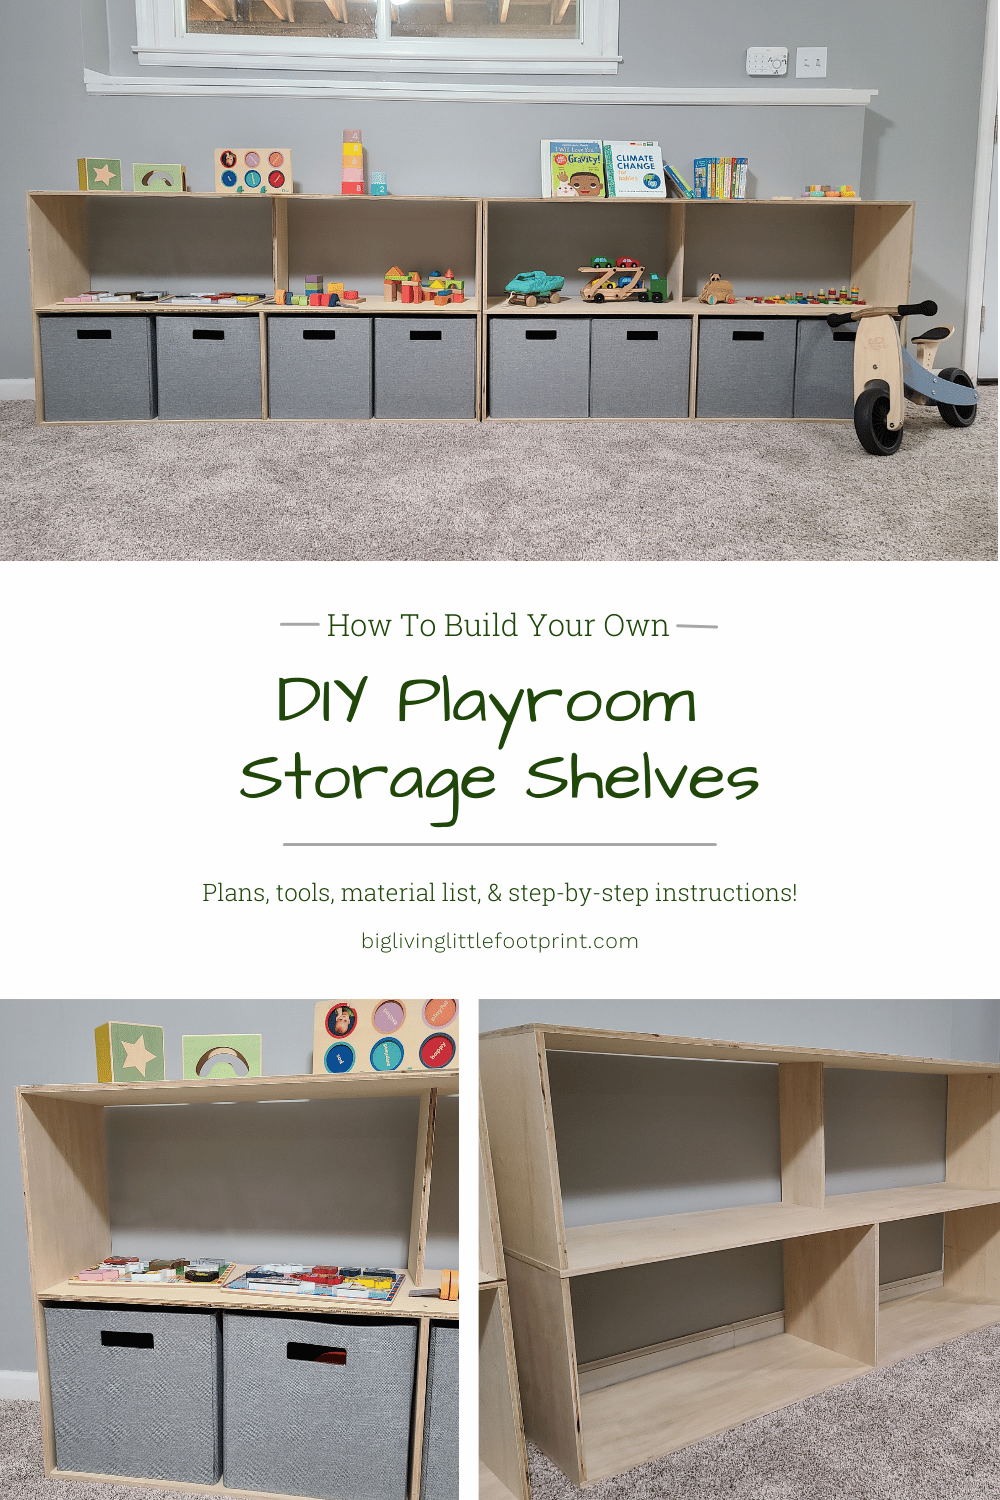 DIY Playroom Storage Shelves Plans